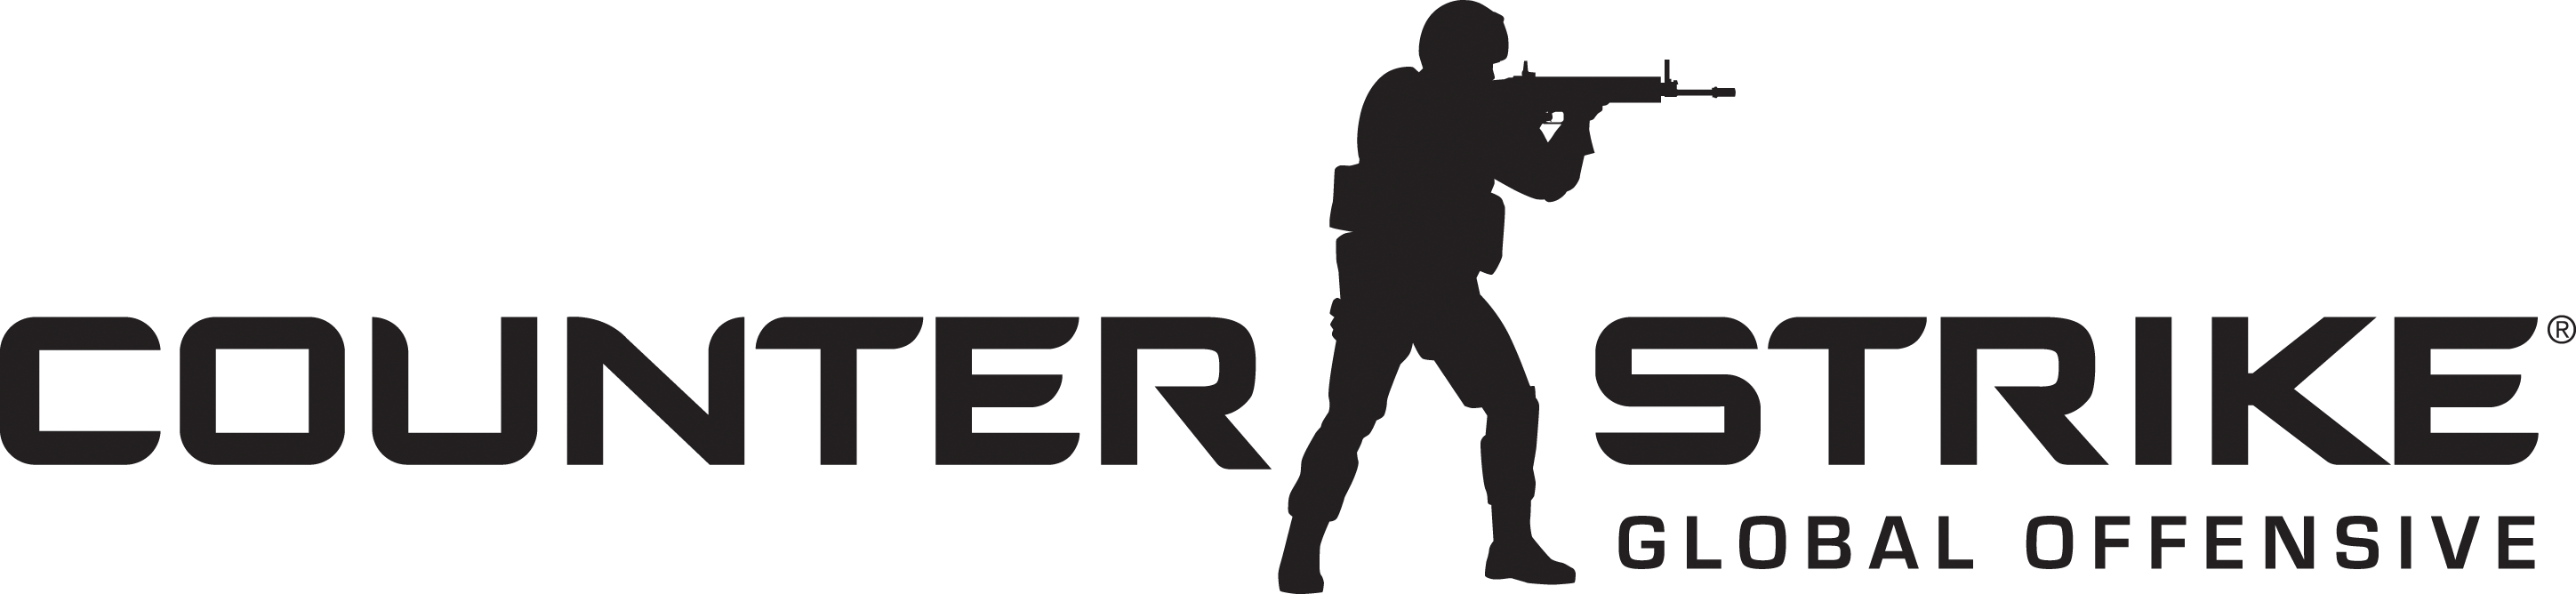 cs go logo  - CS Go Logo - Counter-Strike: Global Offensive Logo